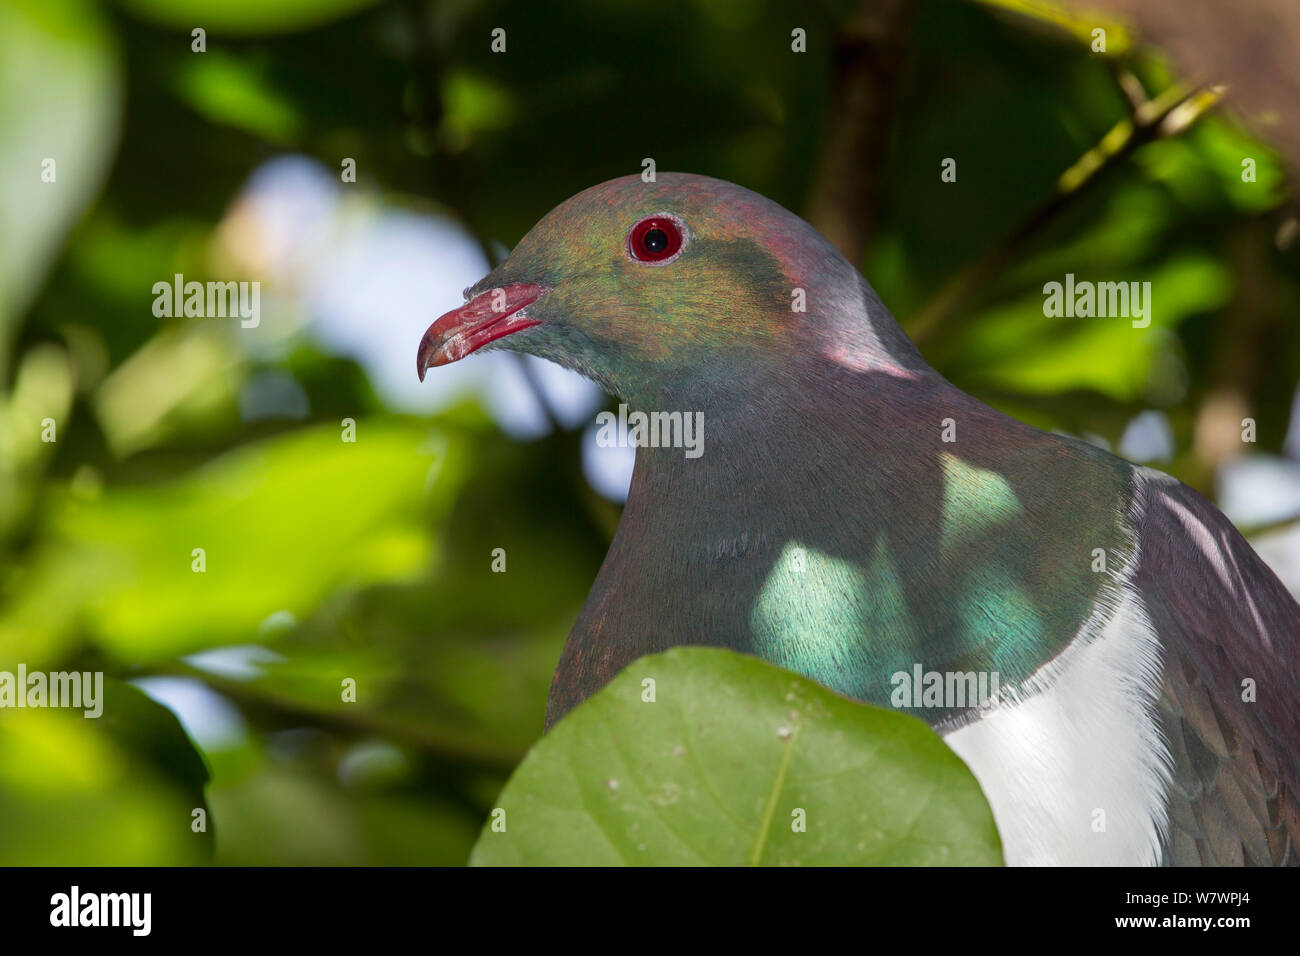 Nueva Zelandia inmaduros pigeon (Hemiphaga novaeseelandiae) mostrando el plumaje iridiscente alrededor de la cabeza, pero sin anillo de ojos rojos. Isla Tiritiri Matangi, Auckland, Nueva Zelanda. Foto de stock